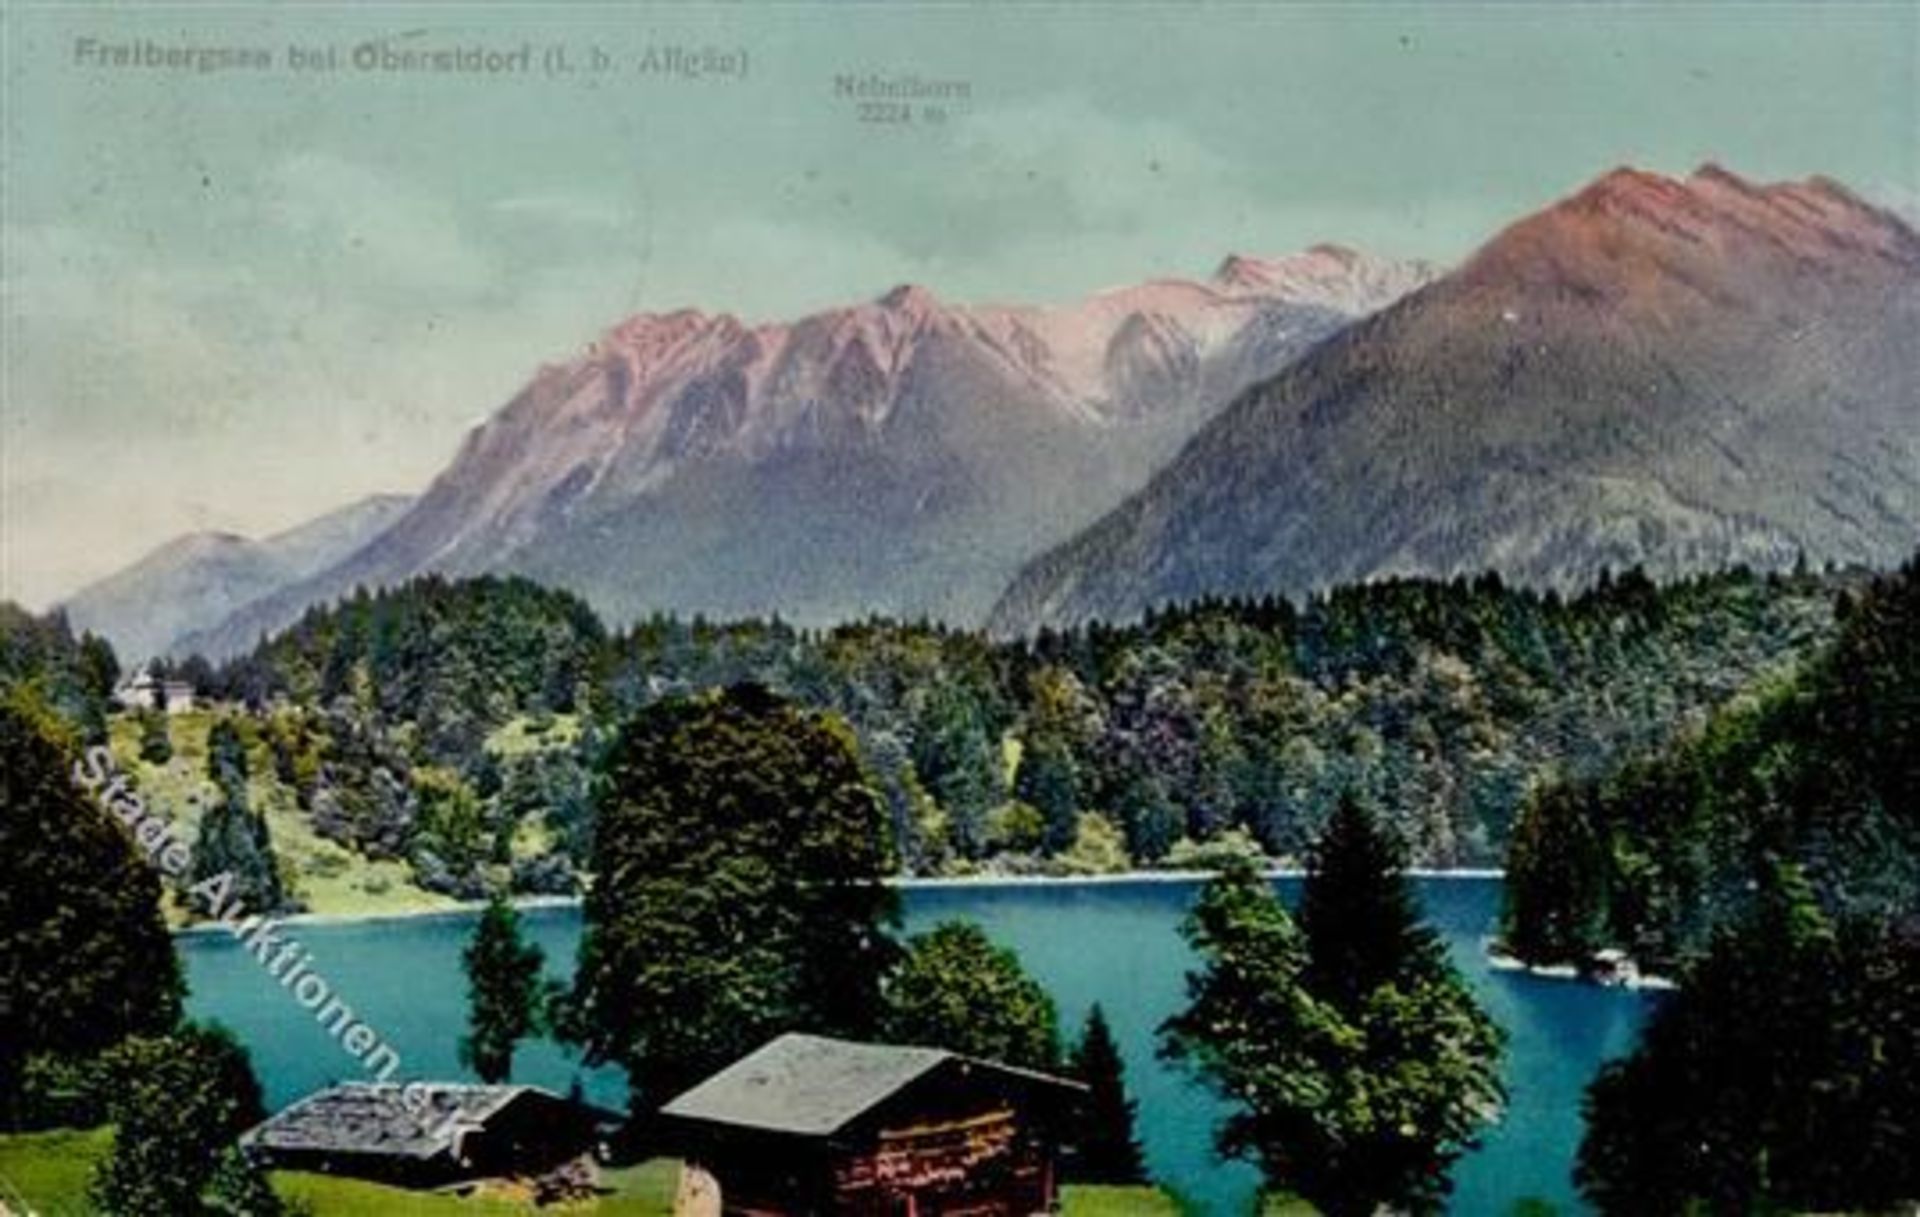 Riezlern (Österreich) farbig Freibergsee bei Oberstdorf, Nebelhorn, 1909, Nebenstempel -Walserschanz